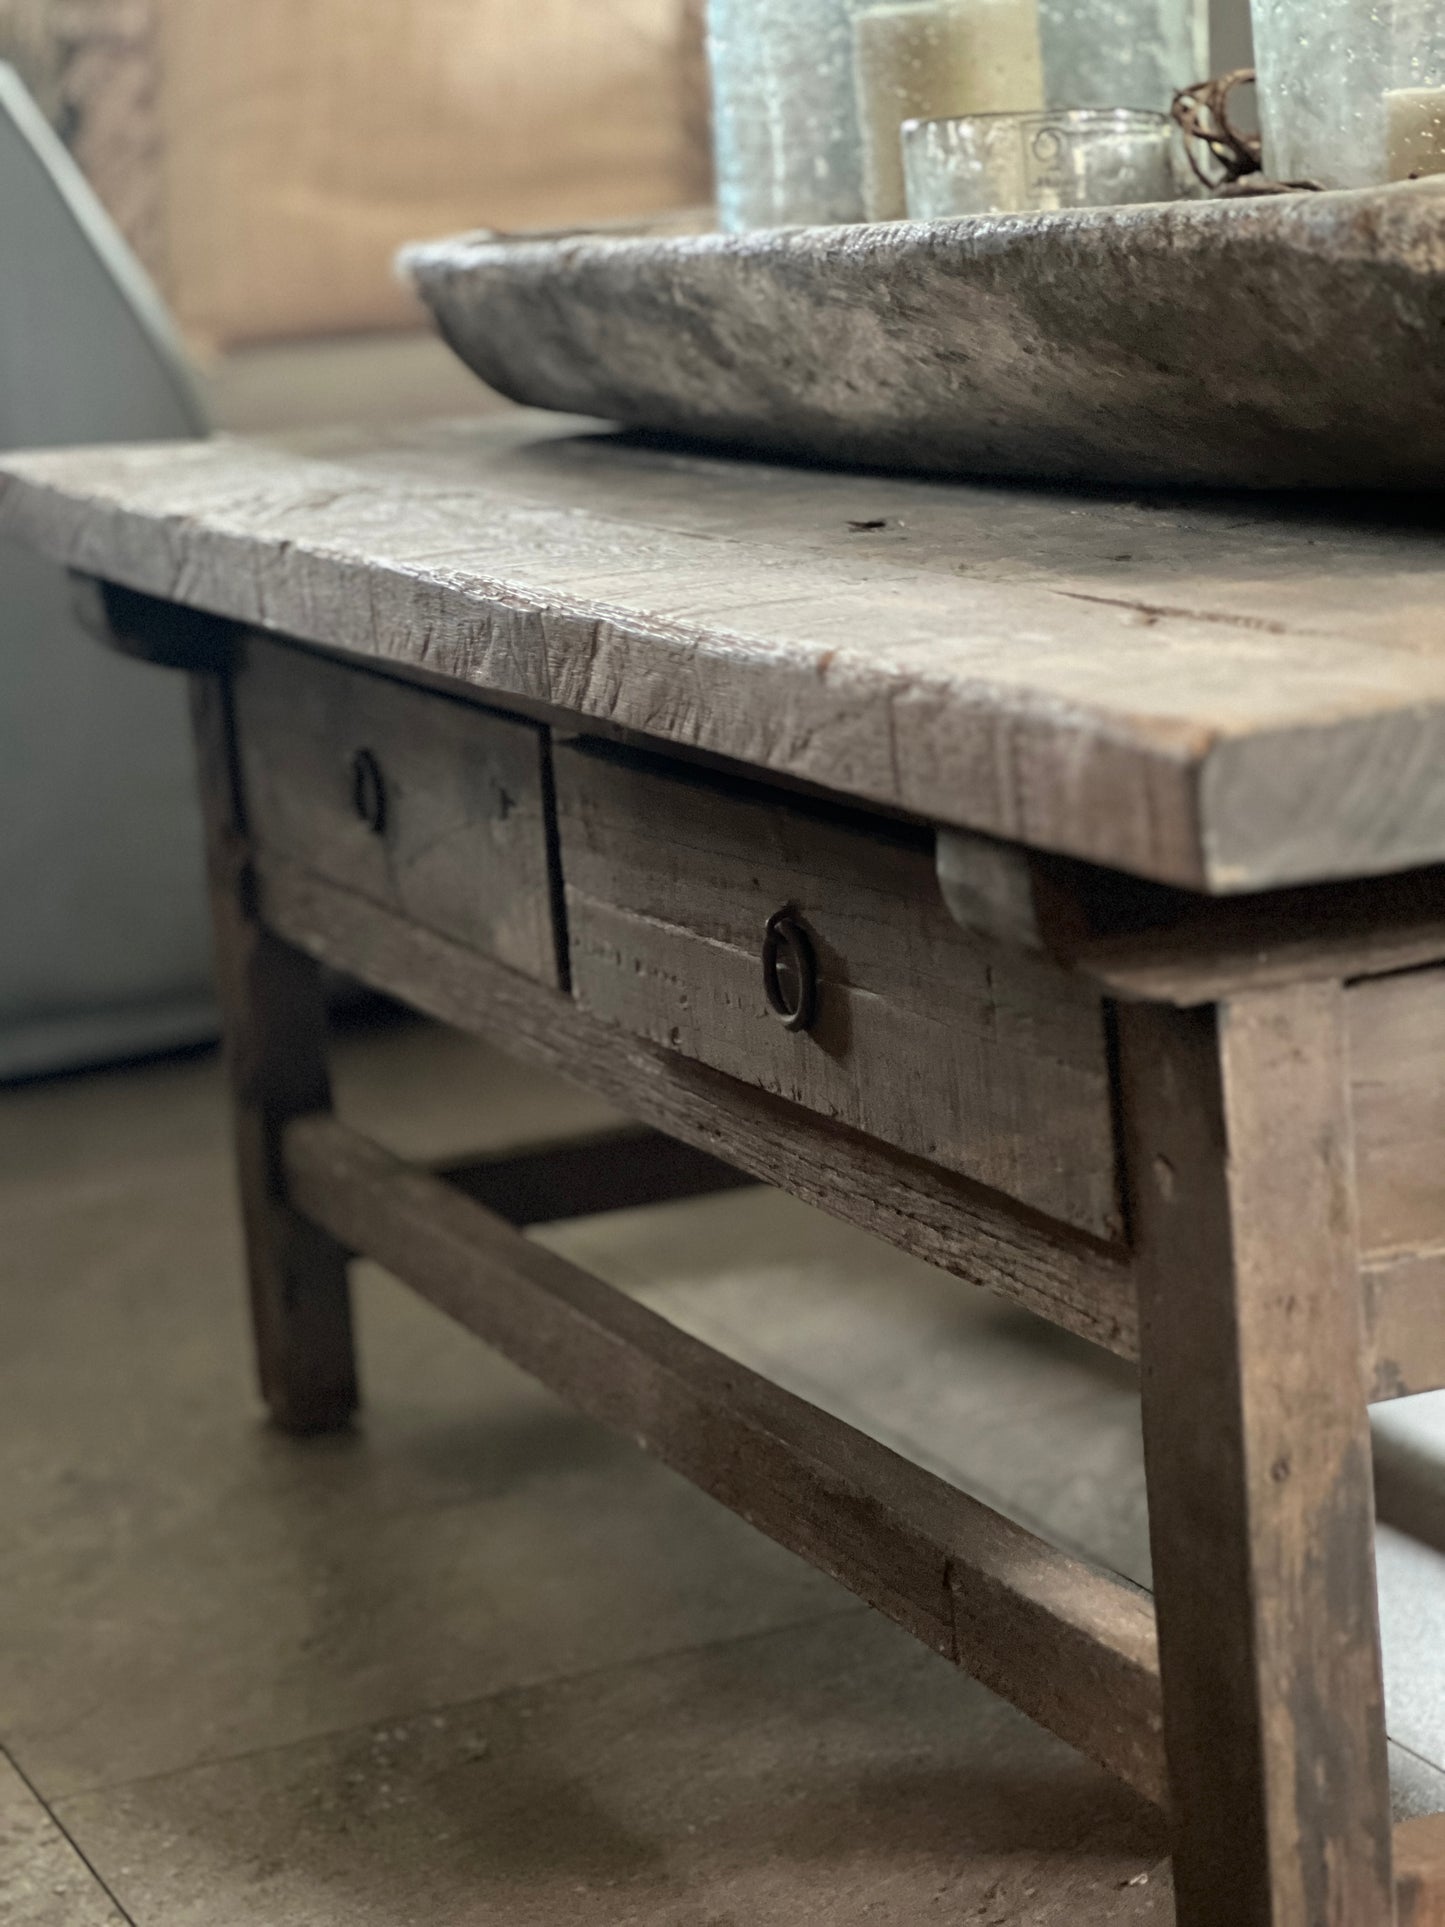 Driftwood coffee table